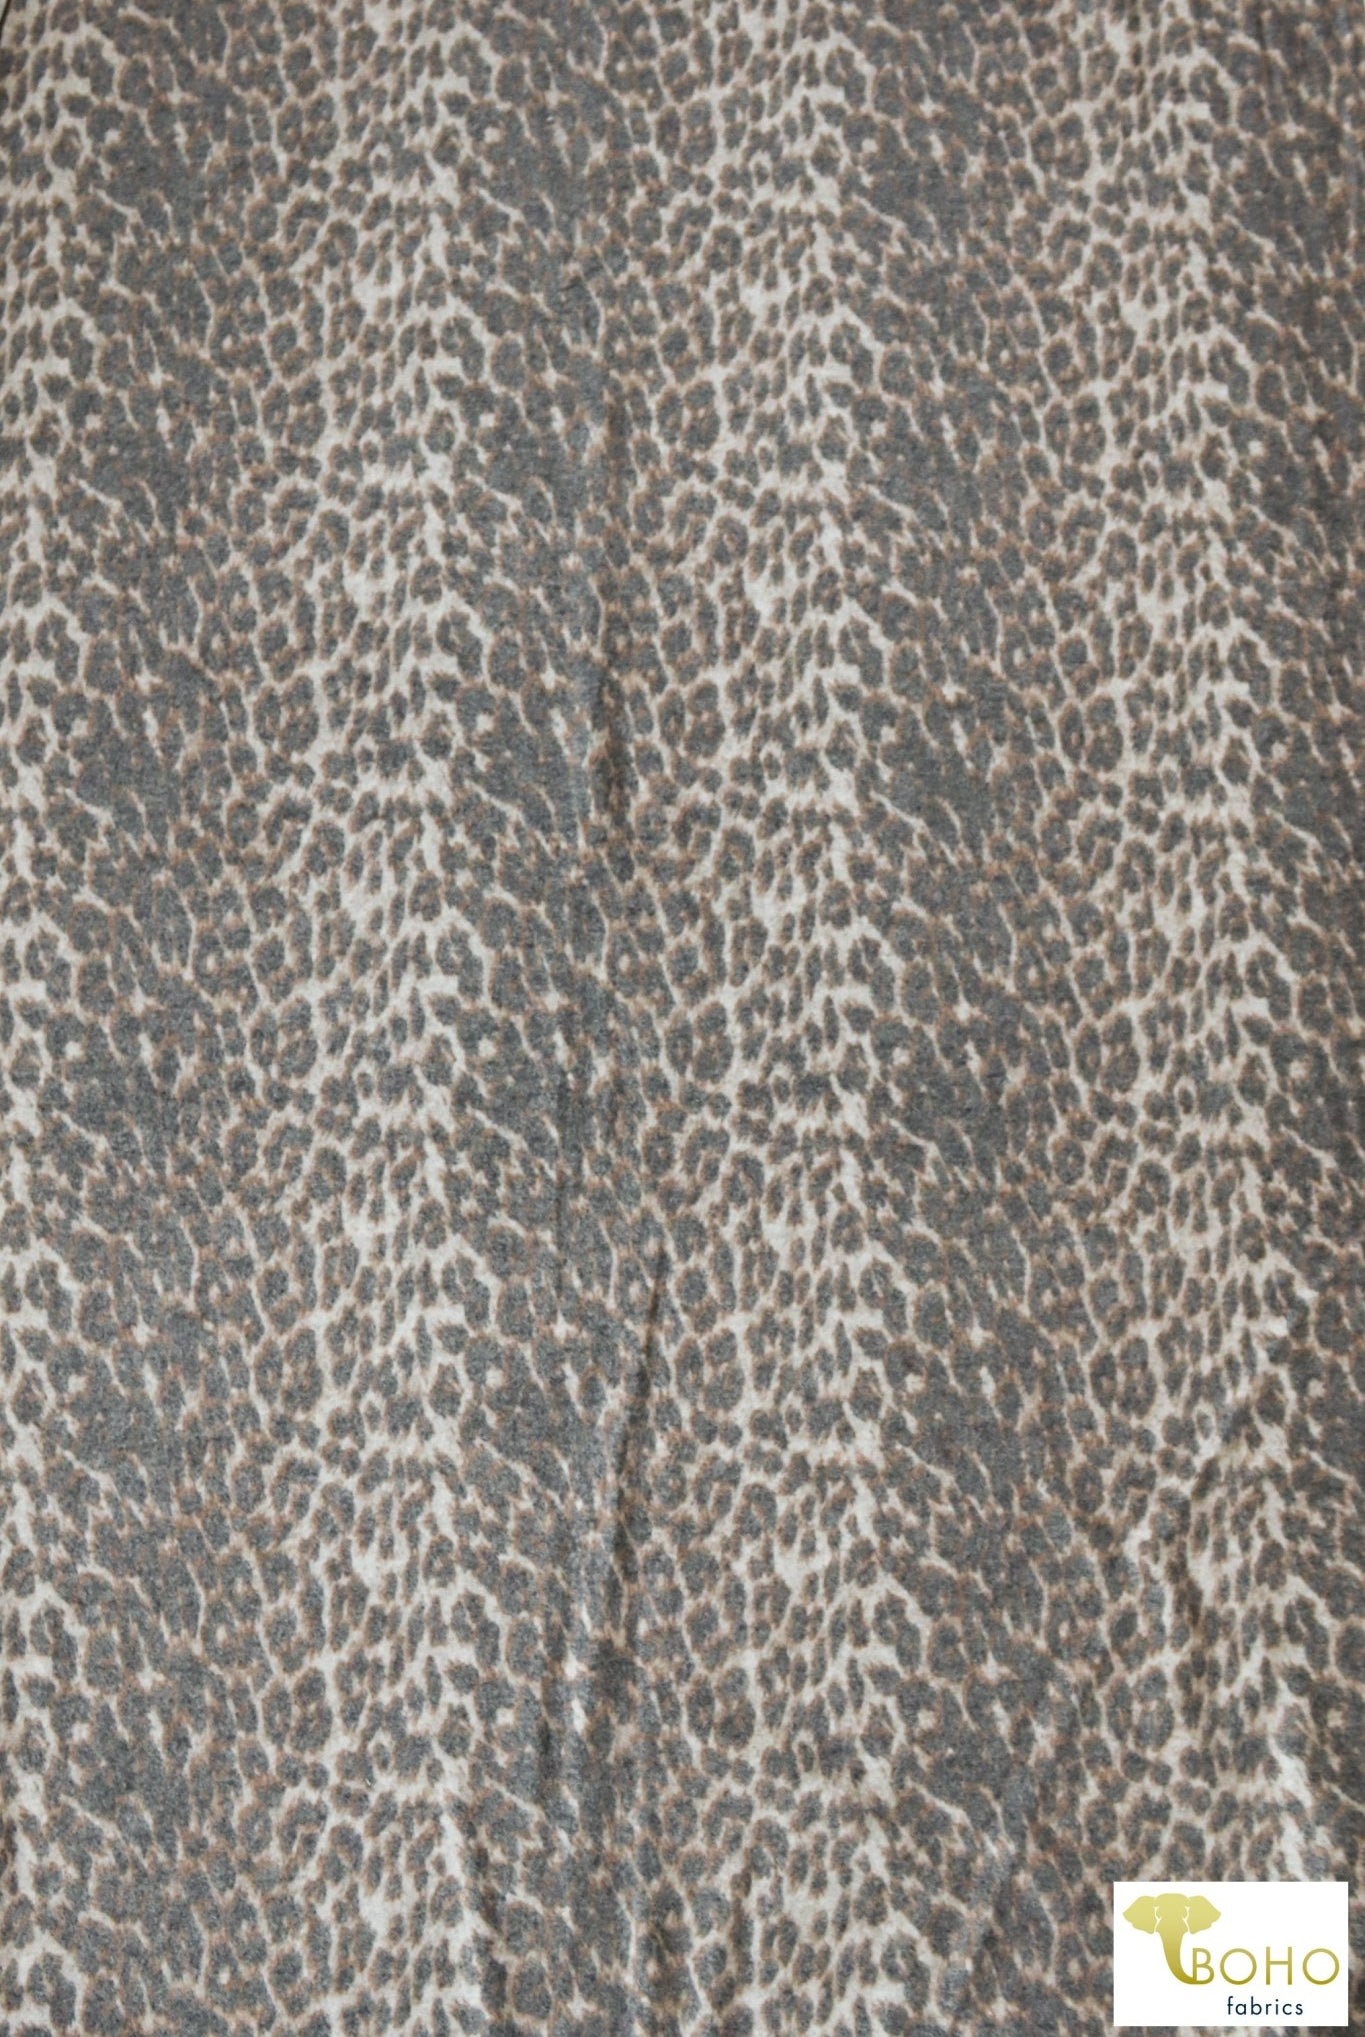 Sabertooth, Brushed Printed Sweater Knit. PRSW-138 - Boho Fabrics